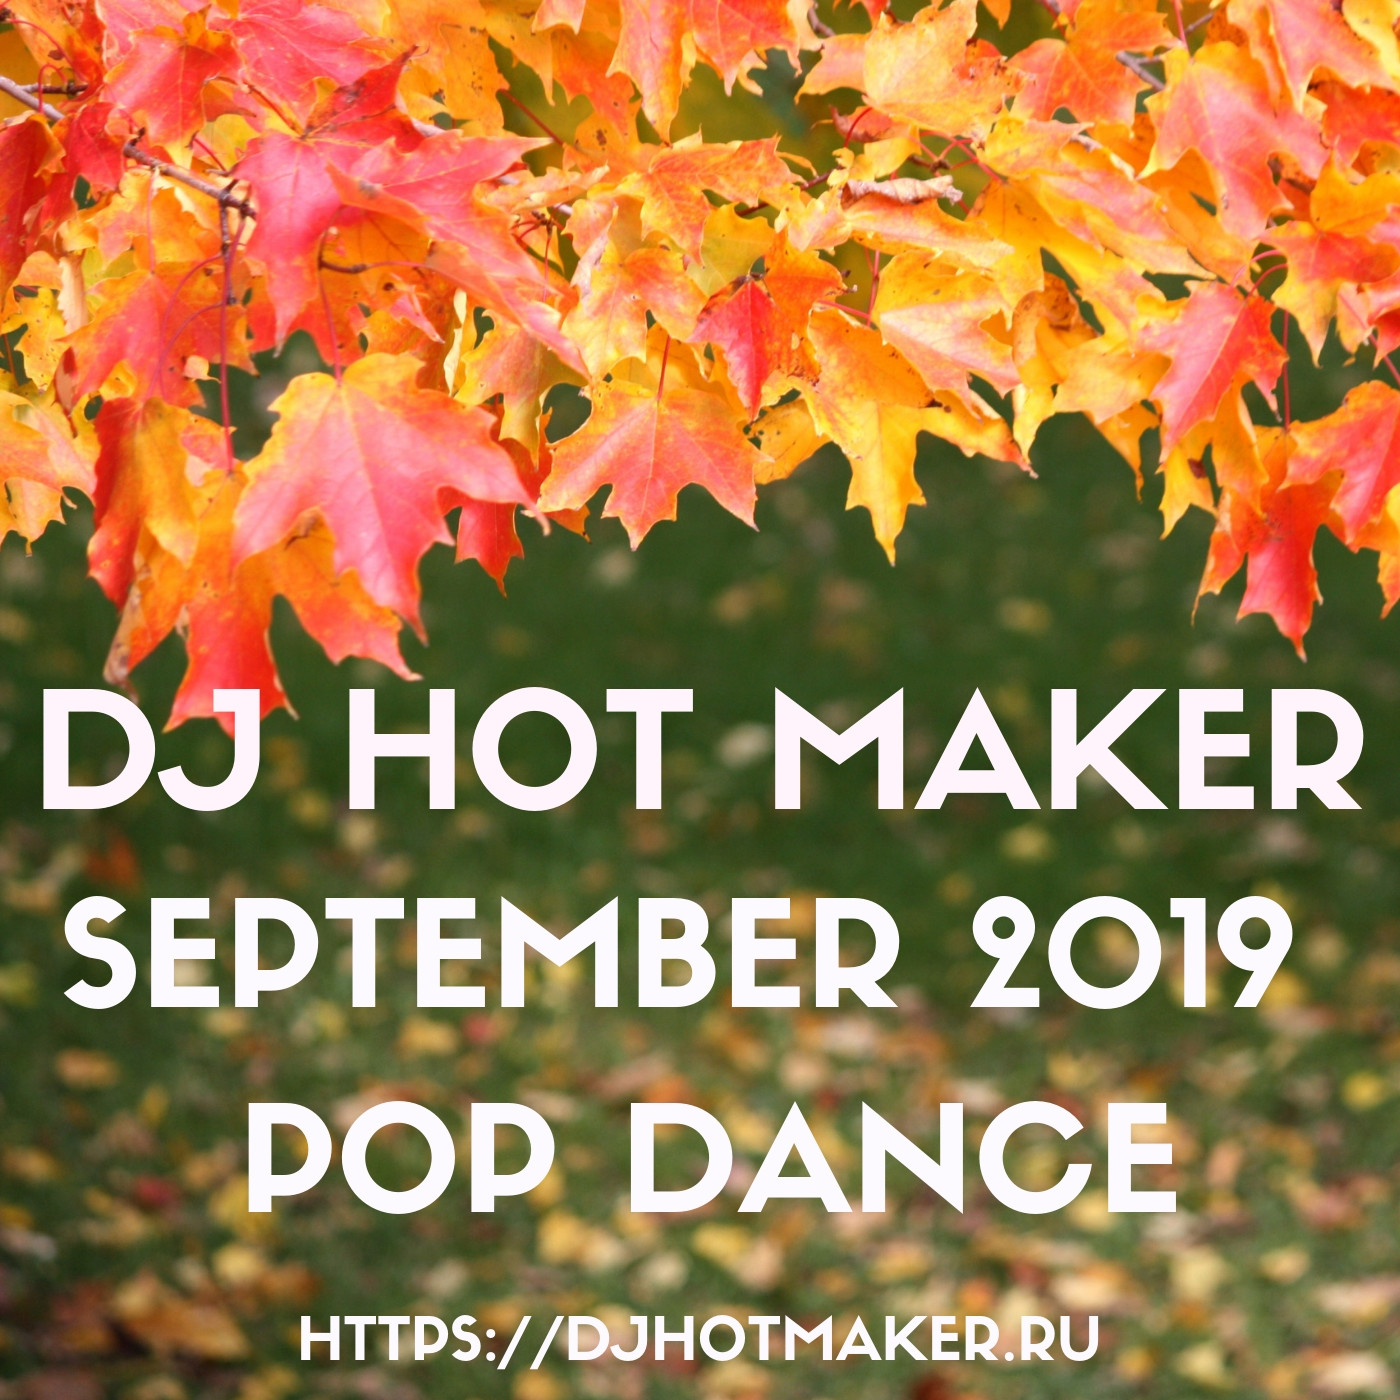 DJ Hot Maker - September 2019 Pop Dance Promo